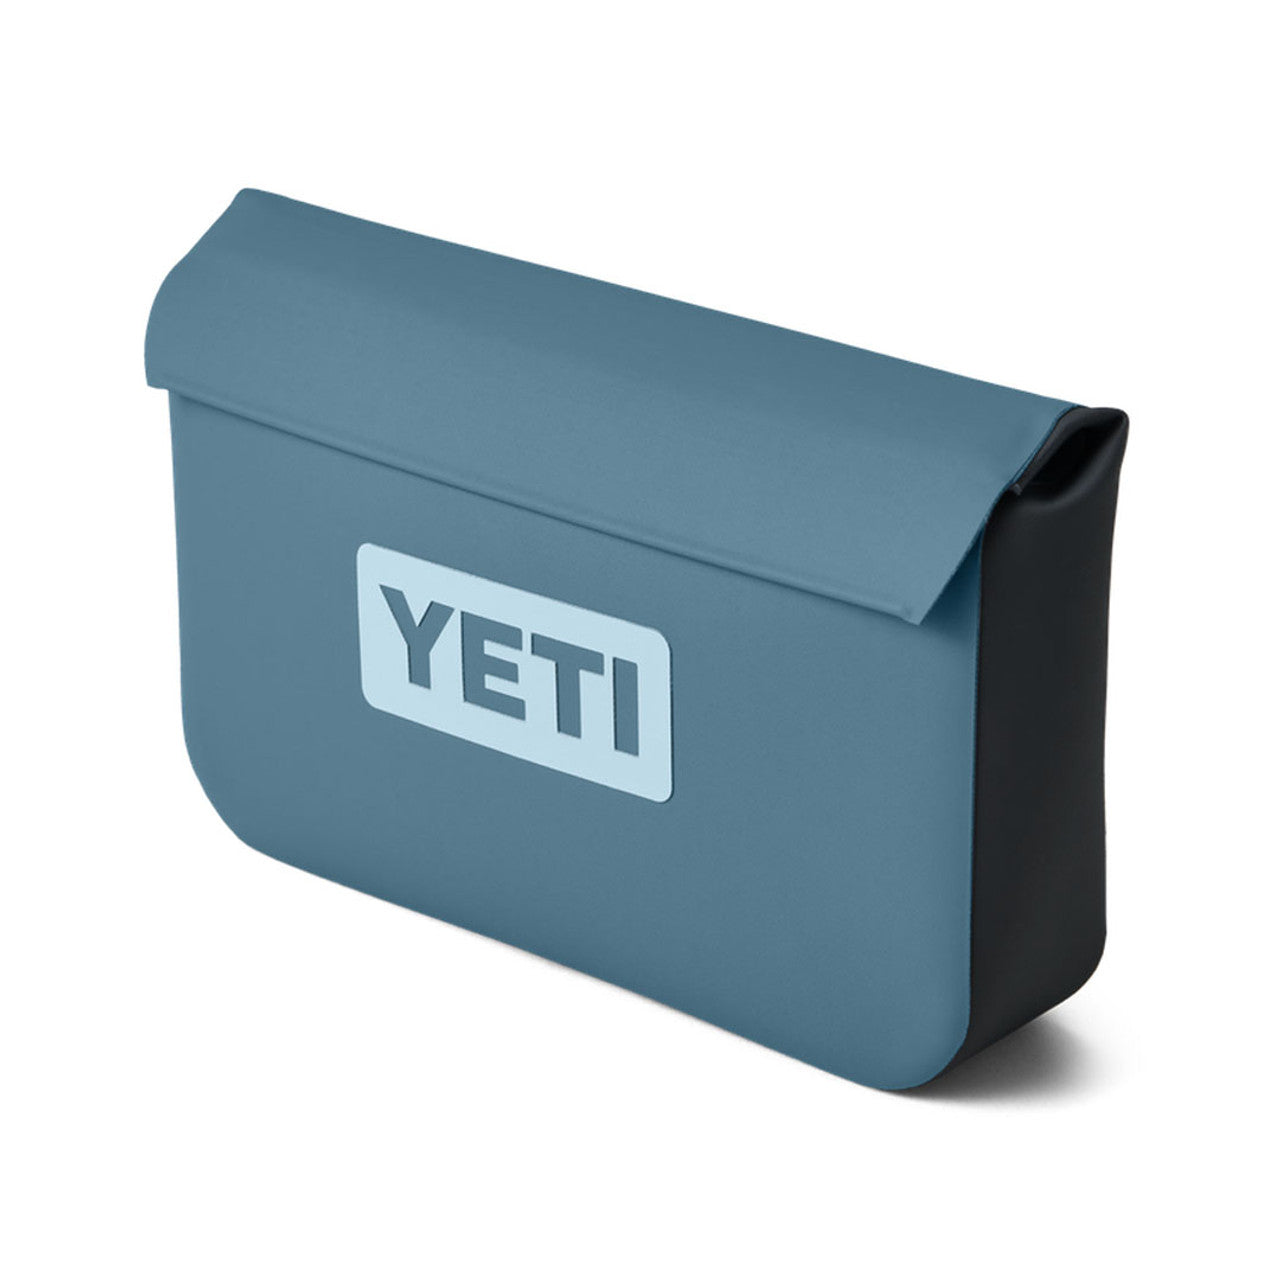 YETI Hopper Sidekick Cooler Case - Fog Gray/Tahoe Blue